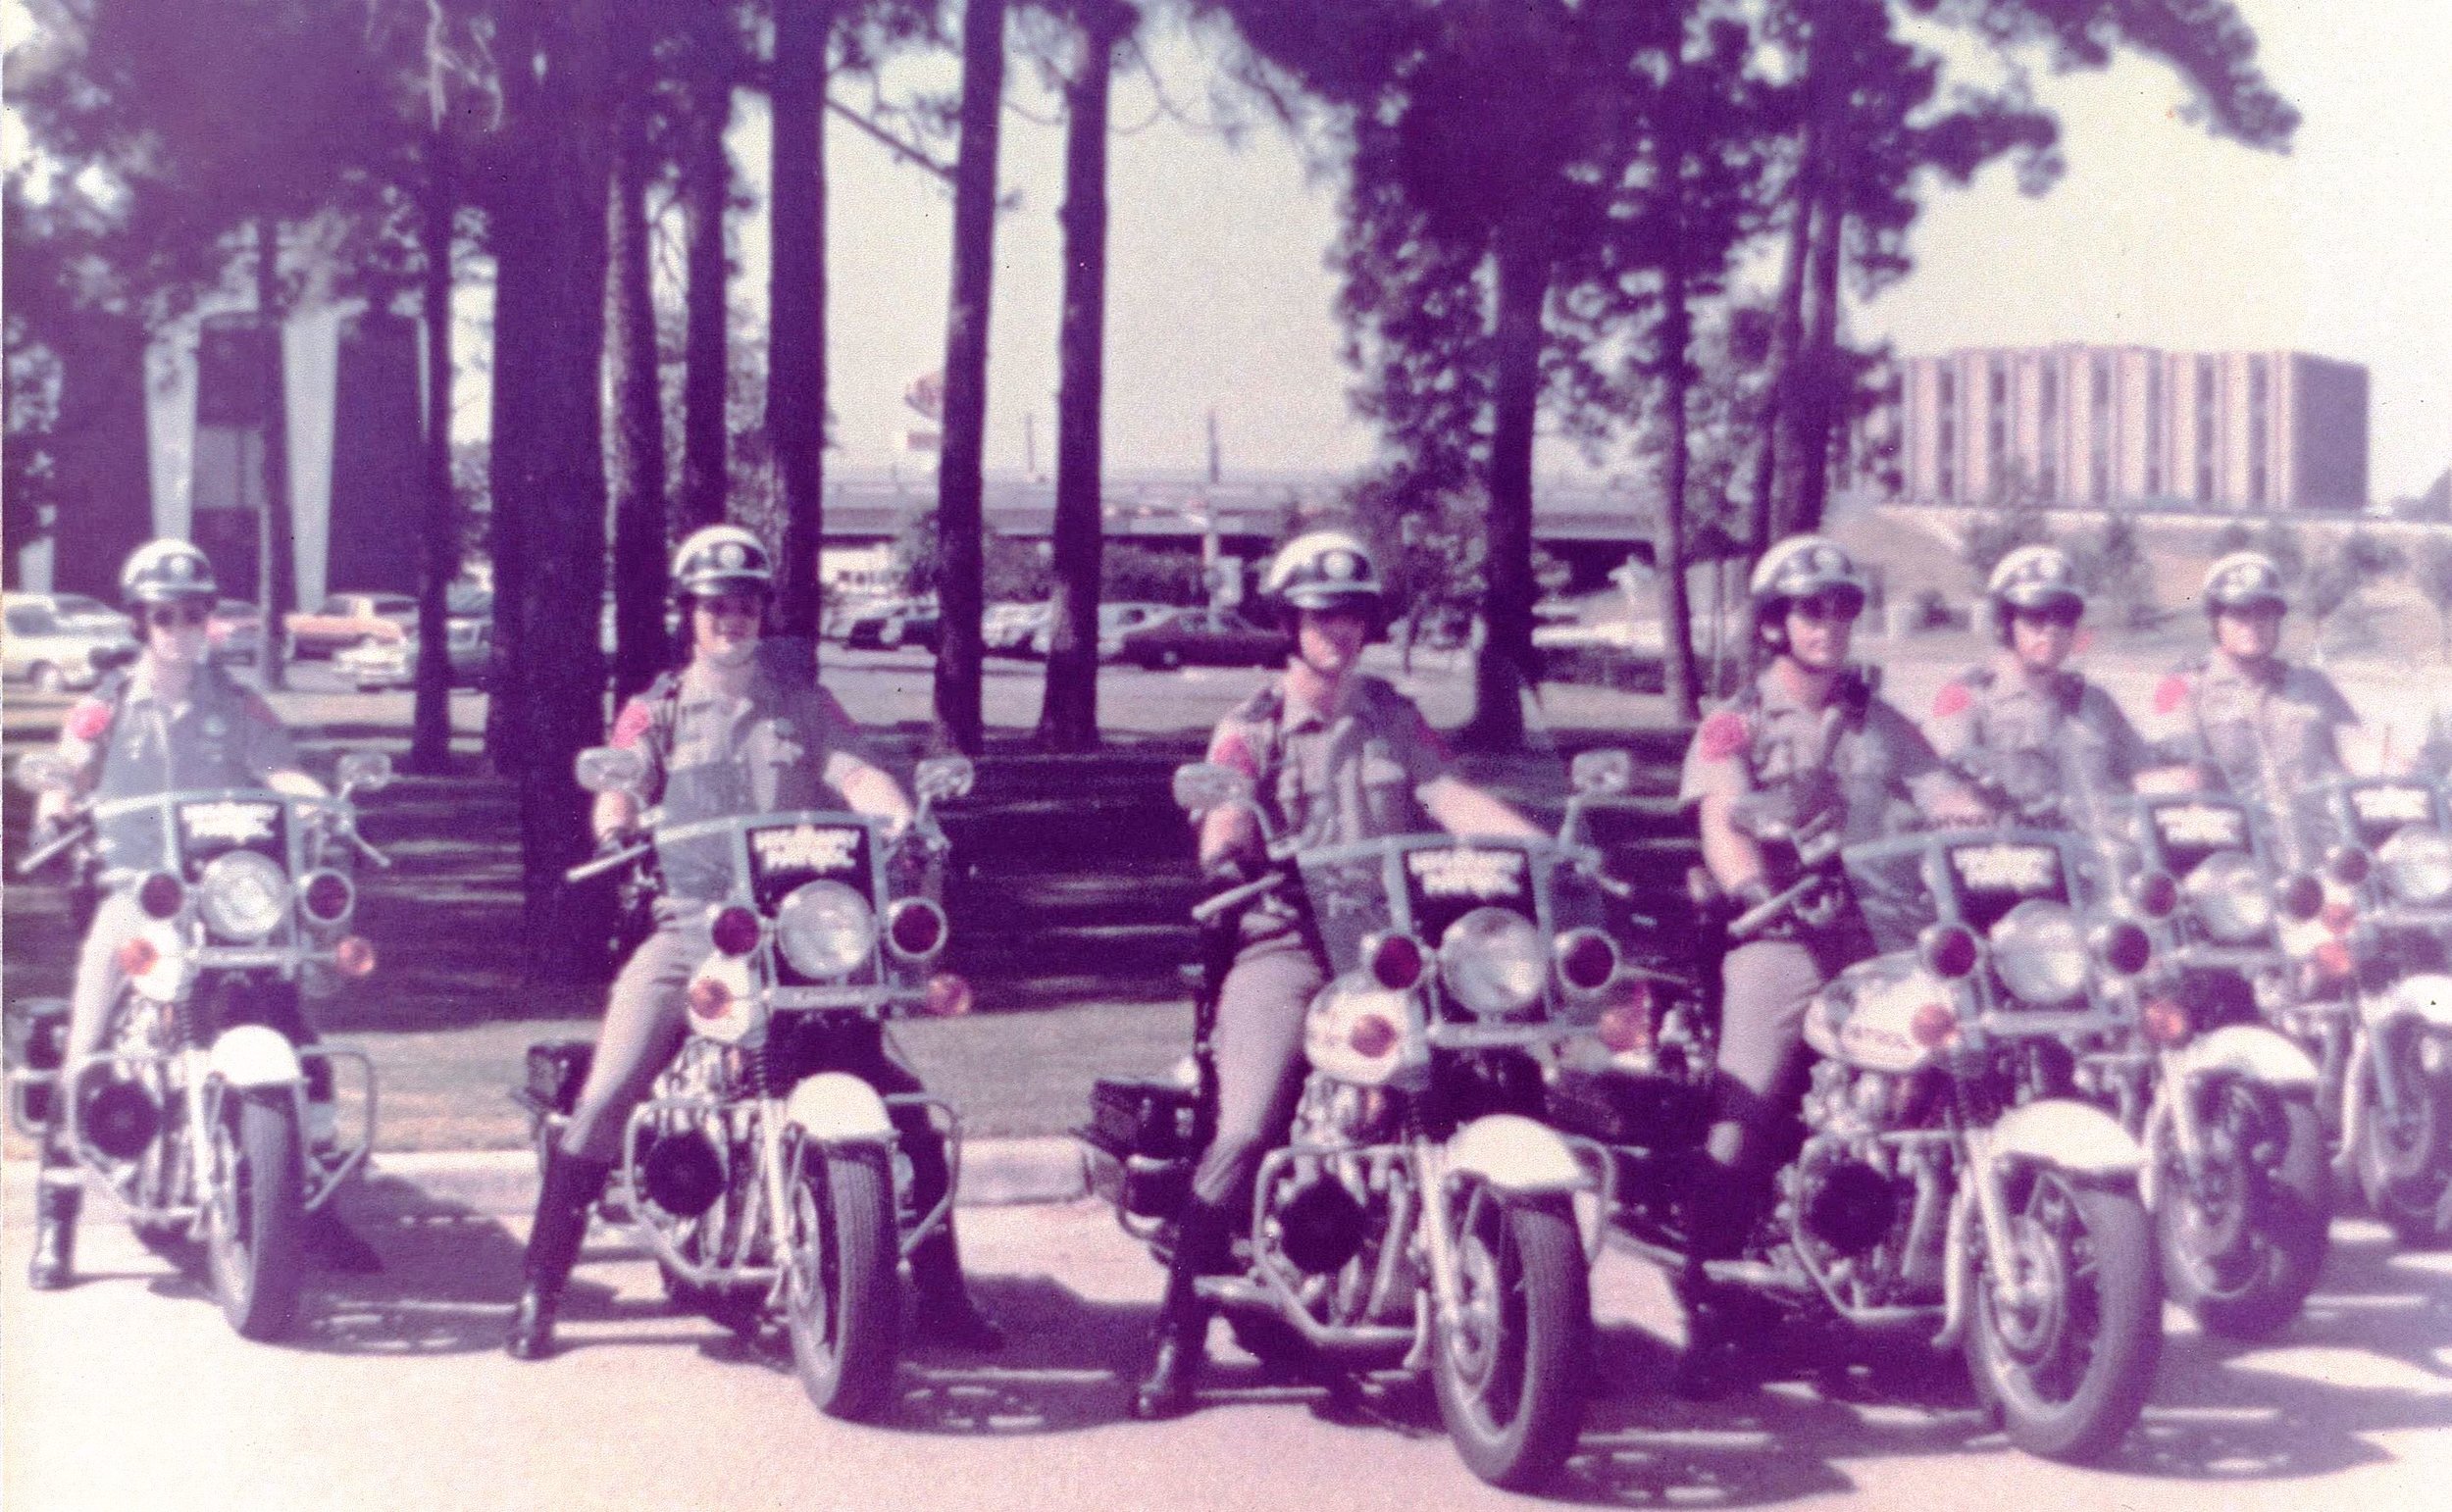 1970s DPS Motorcycle Unit Houston.jpg